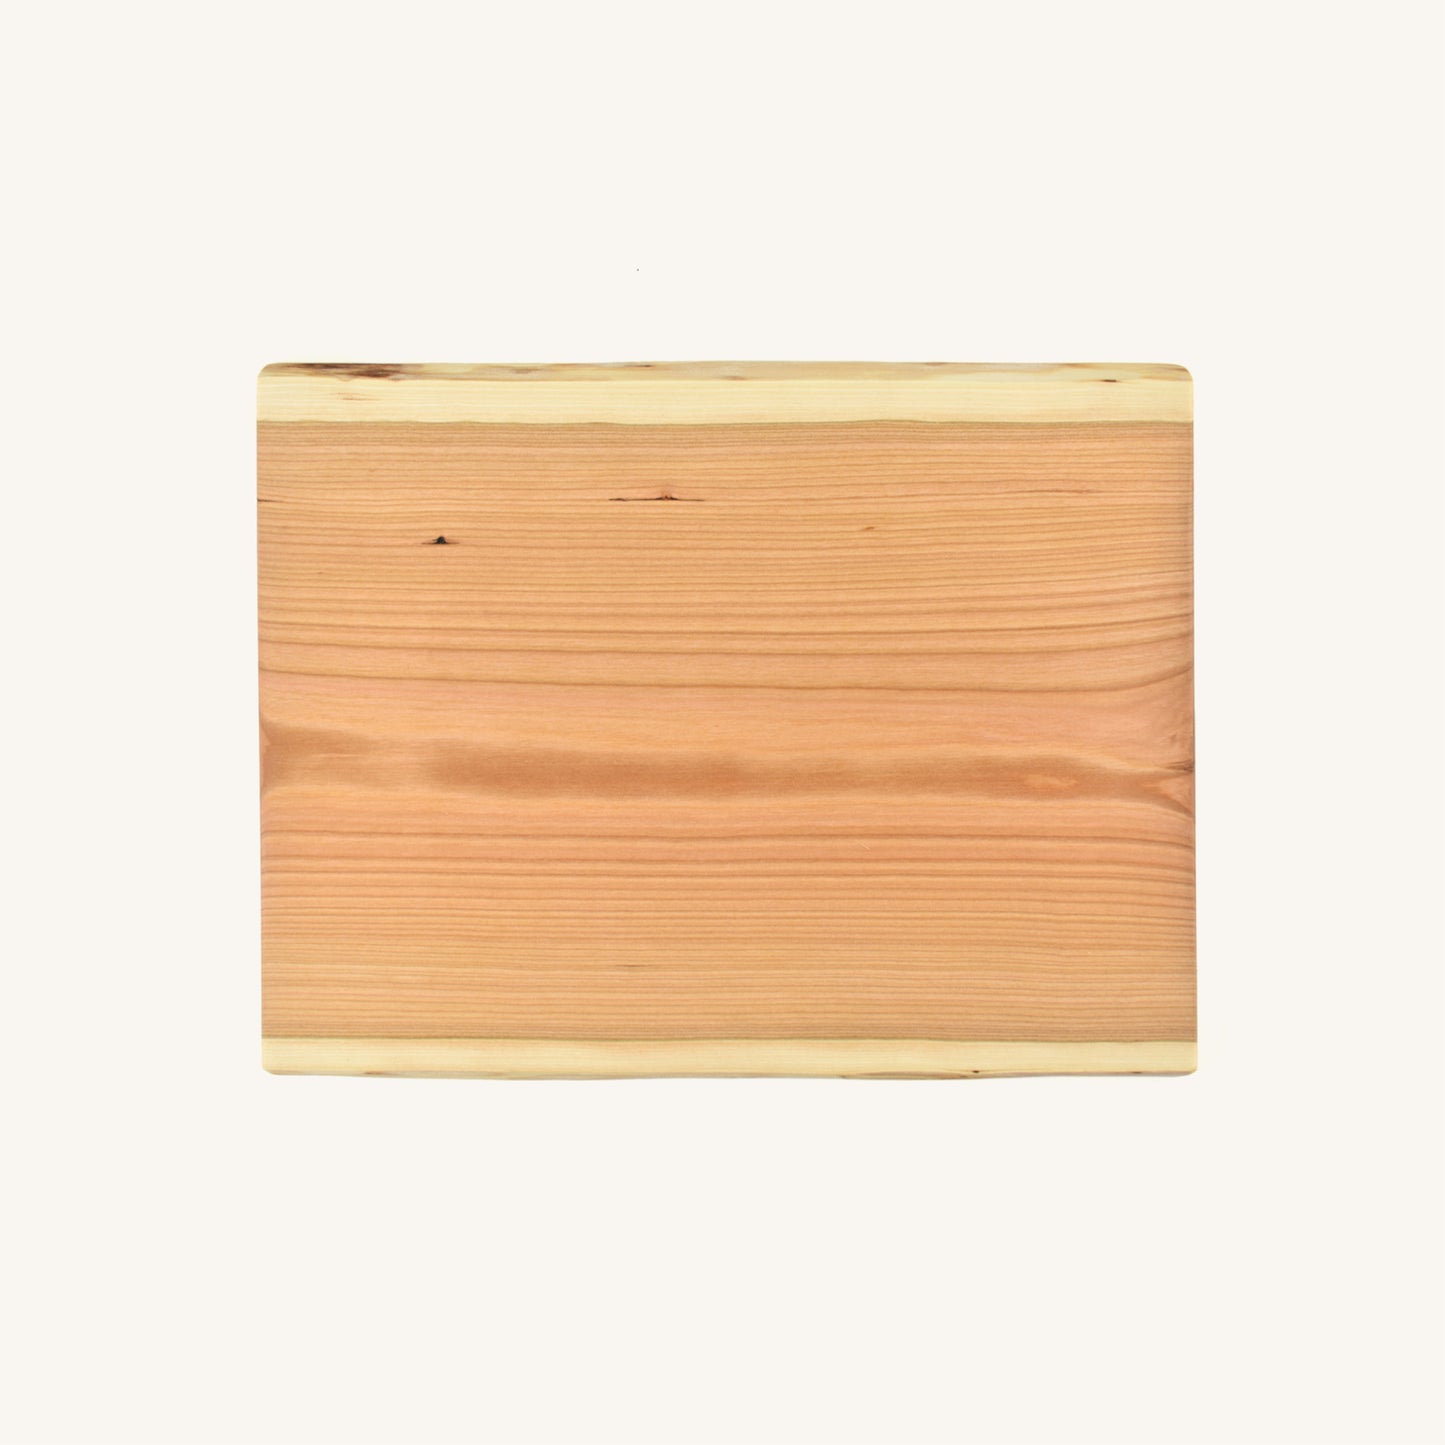 Small Live Edge Rectangular Wood Serving Board